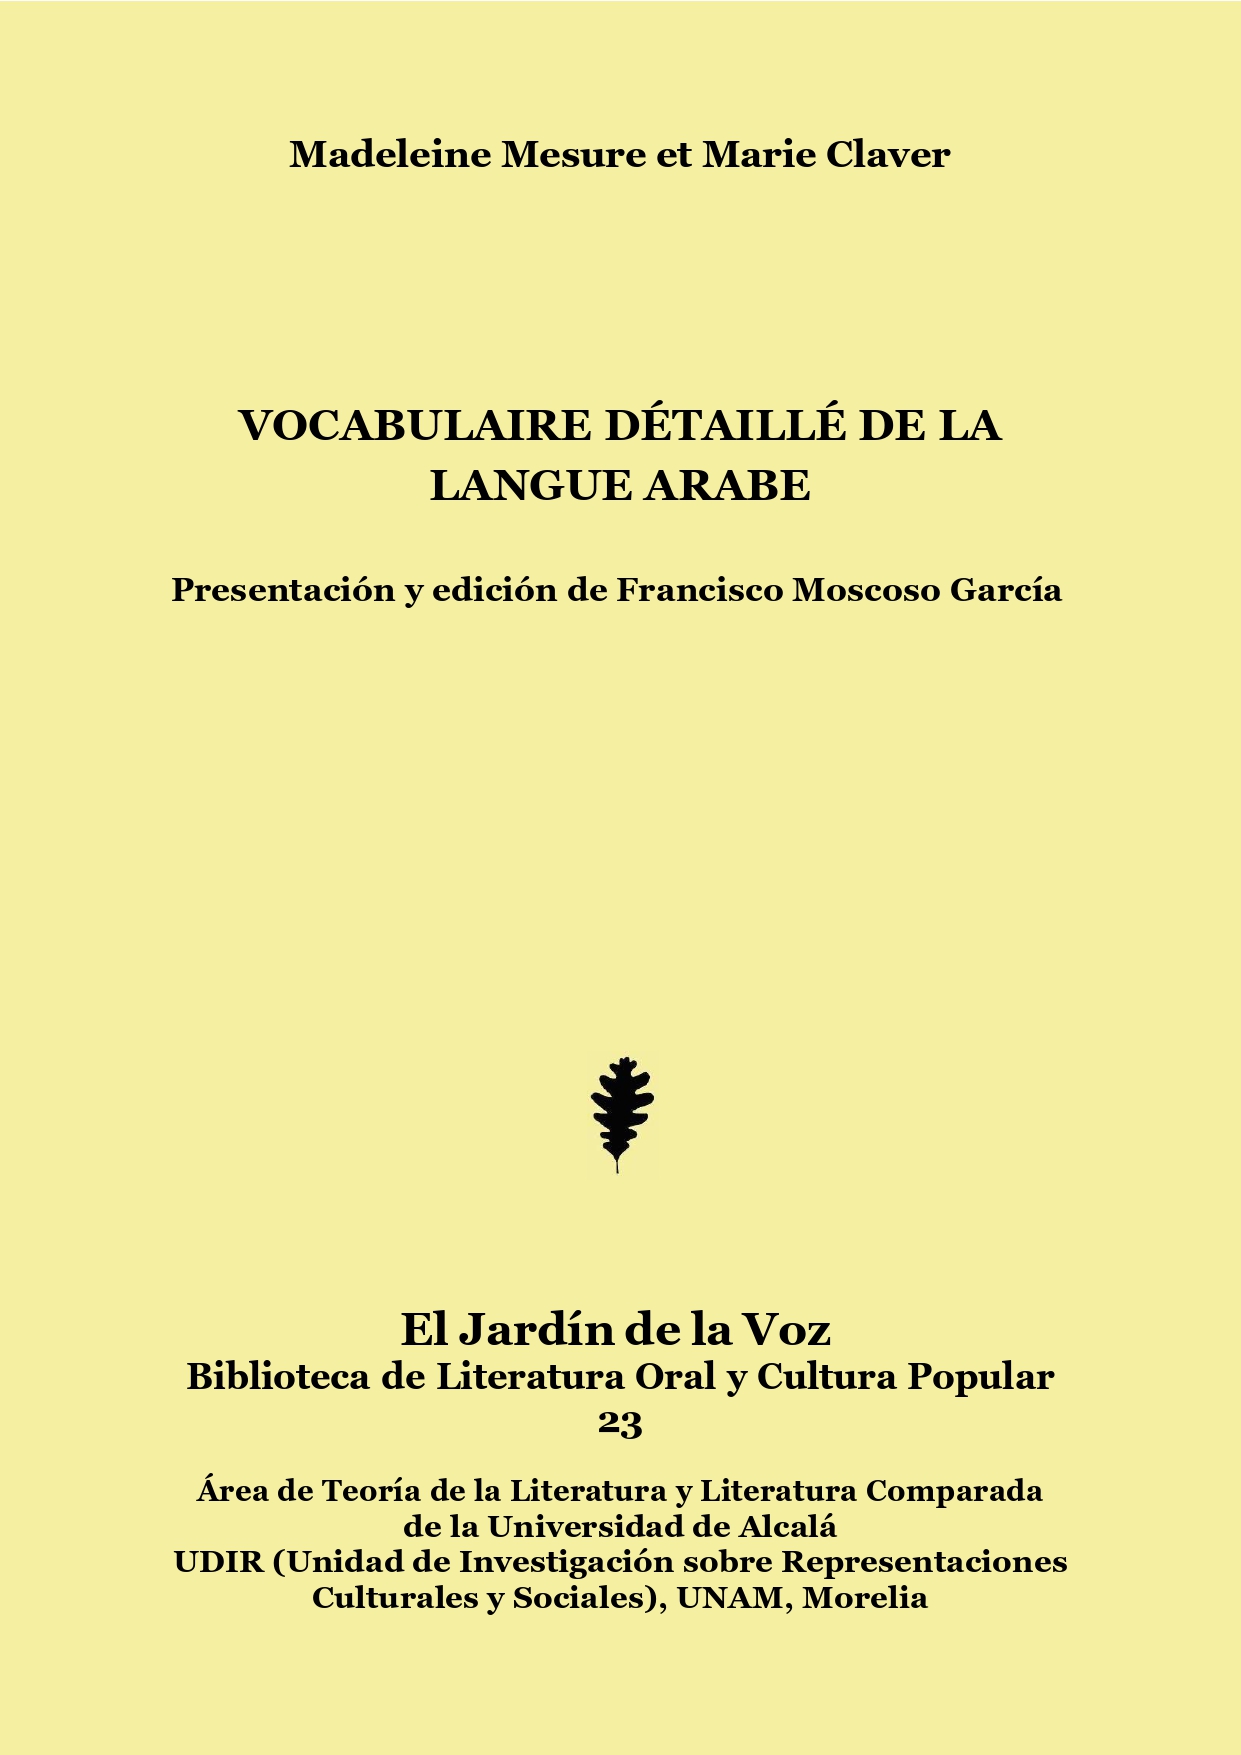 Imagen de portada del libro Vocabulaire détaillé de la langue arabe